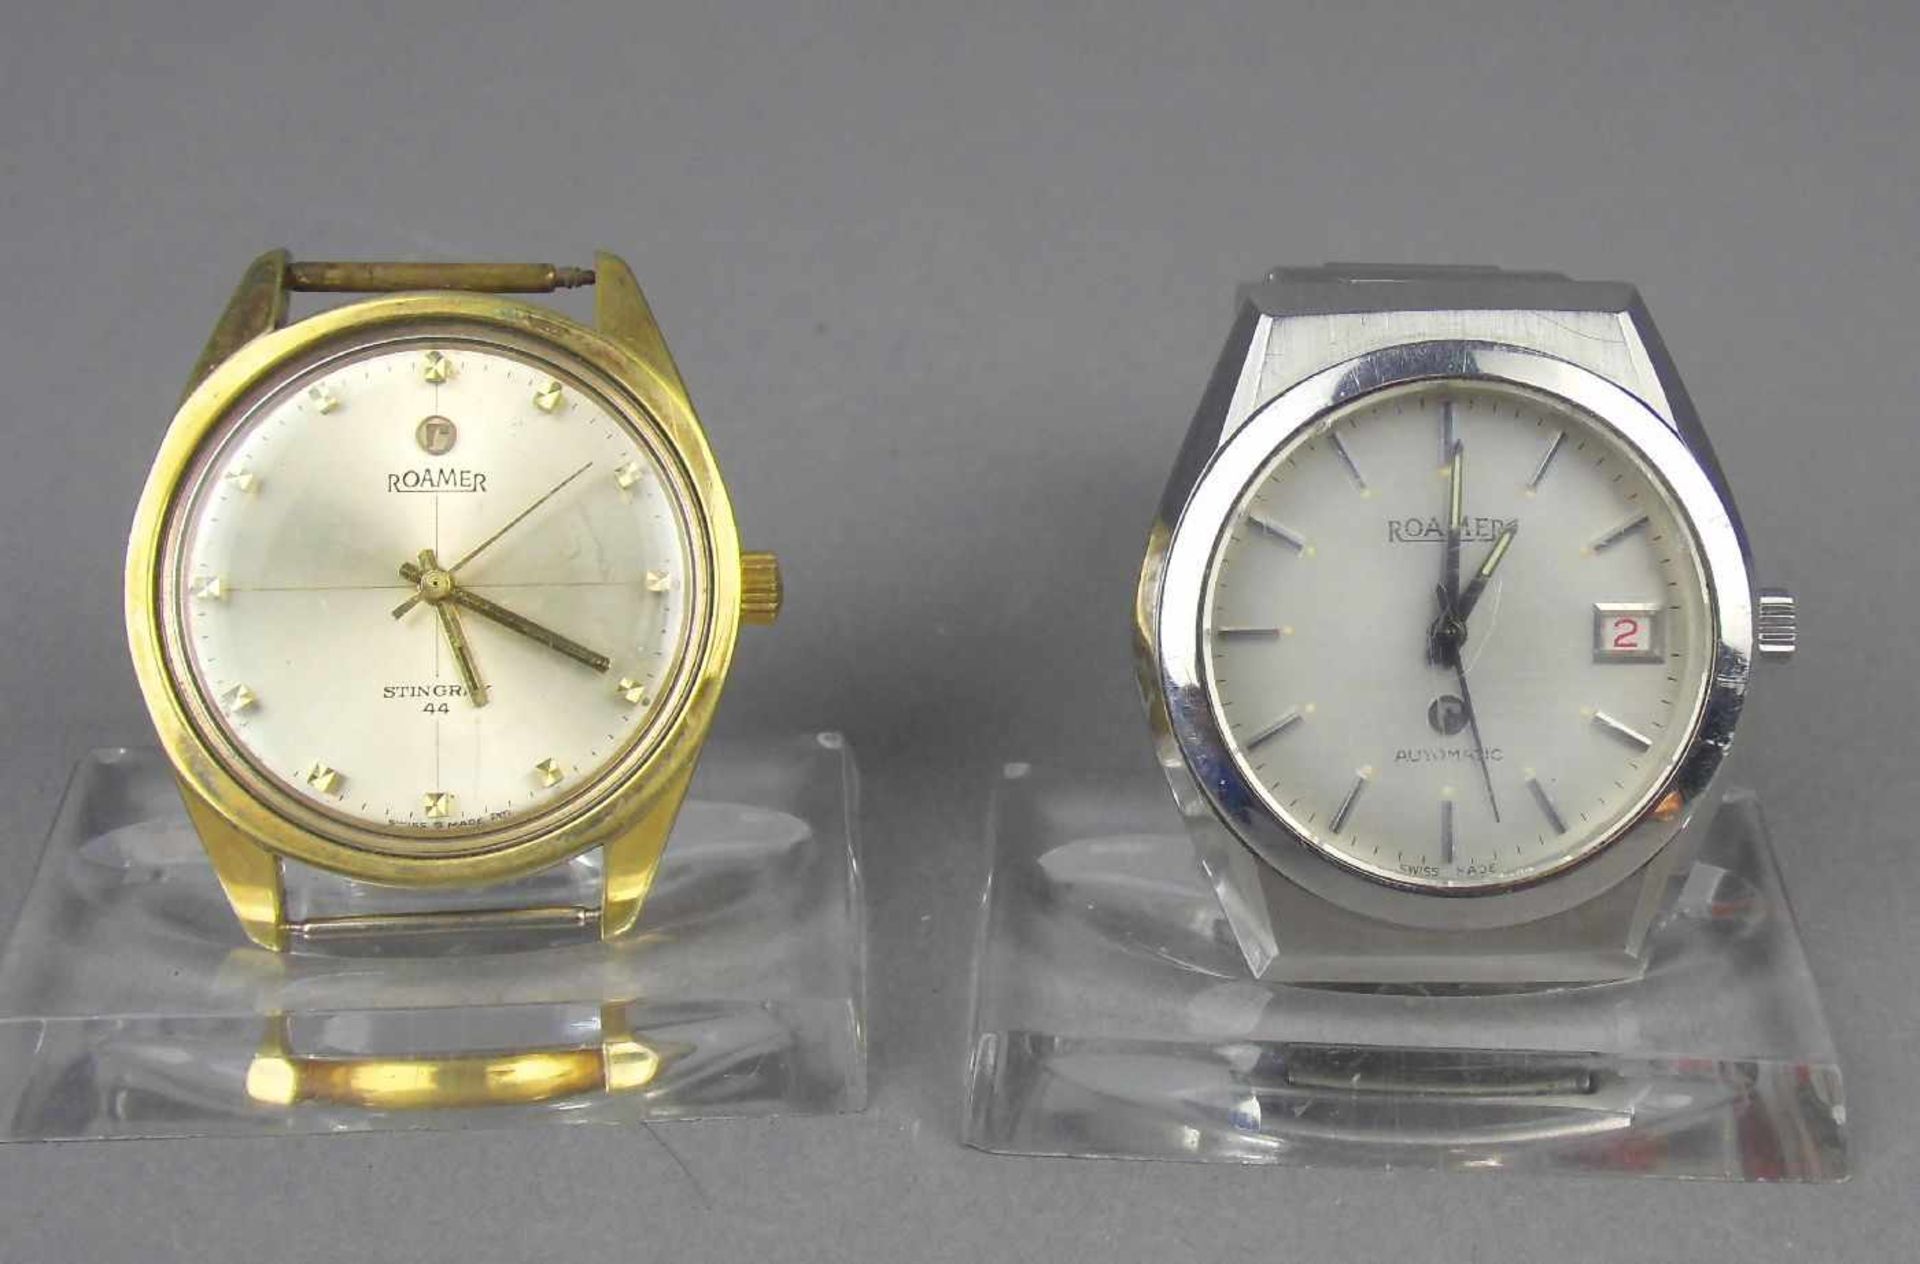 KONVOLUT VINTAGE ARMBANDUHREN: ROAMER / wristwatches, 1970er Jahre, Automatik-Uhr, Manufaktur Roamer